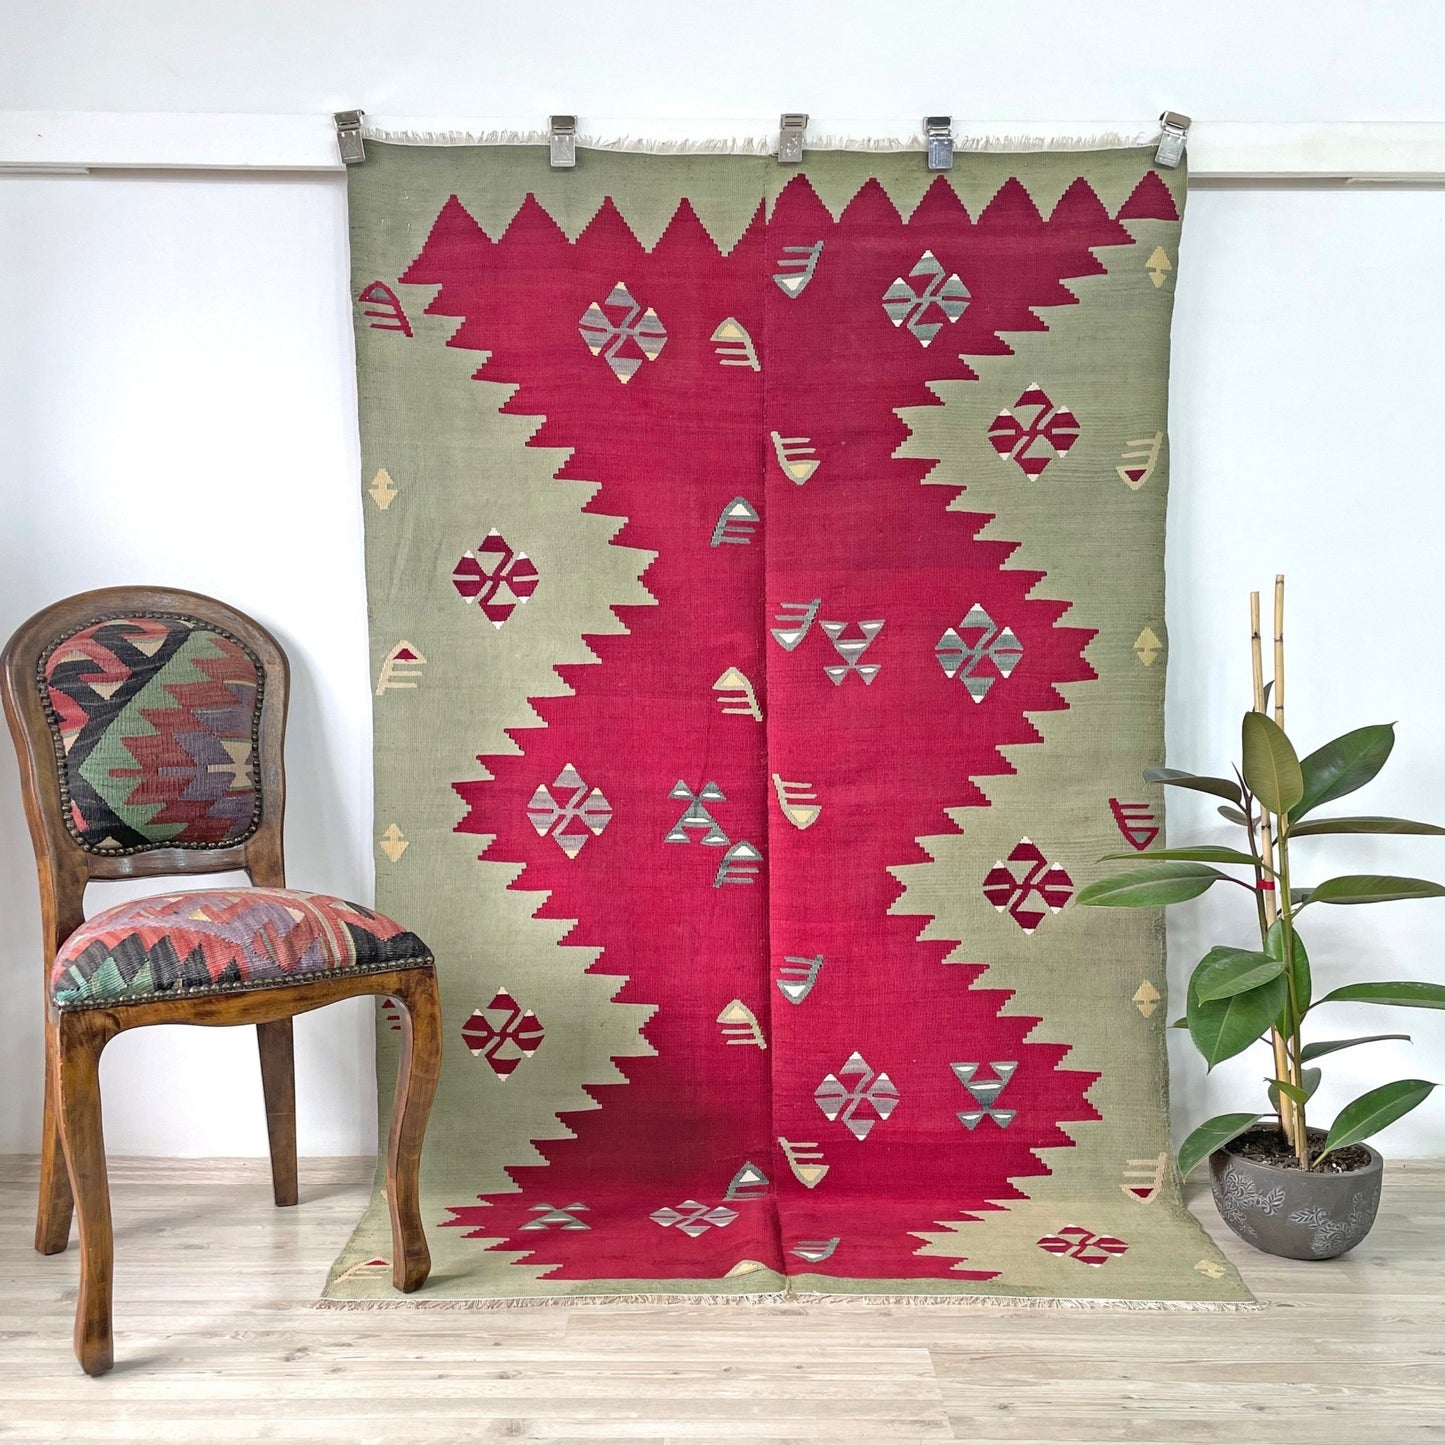 pirot kilim turkish rug shopping online san francisco palo alto berkeley bay area rug store